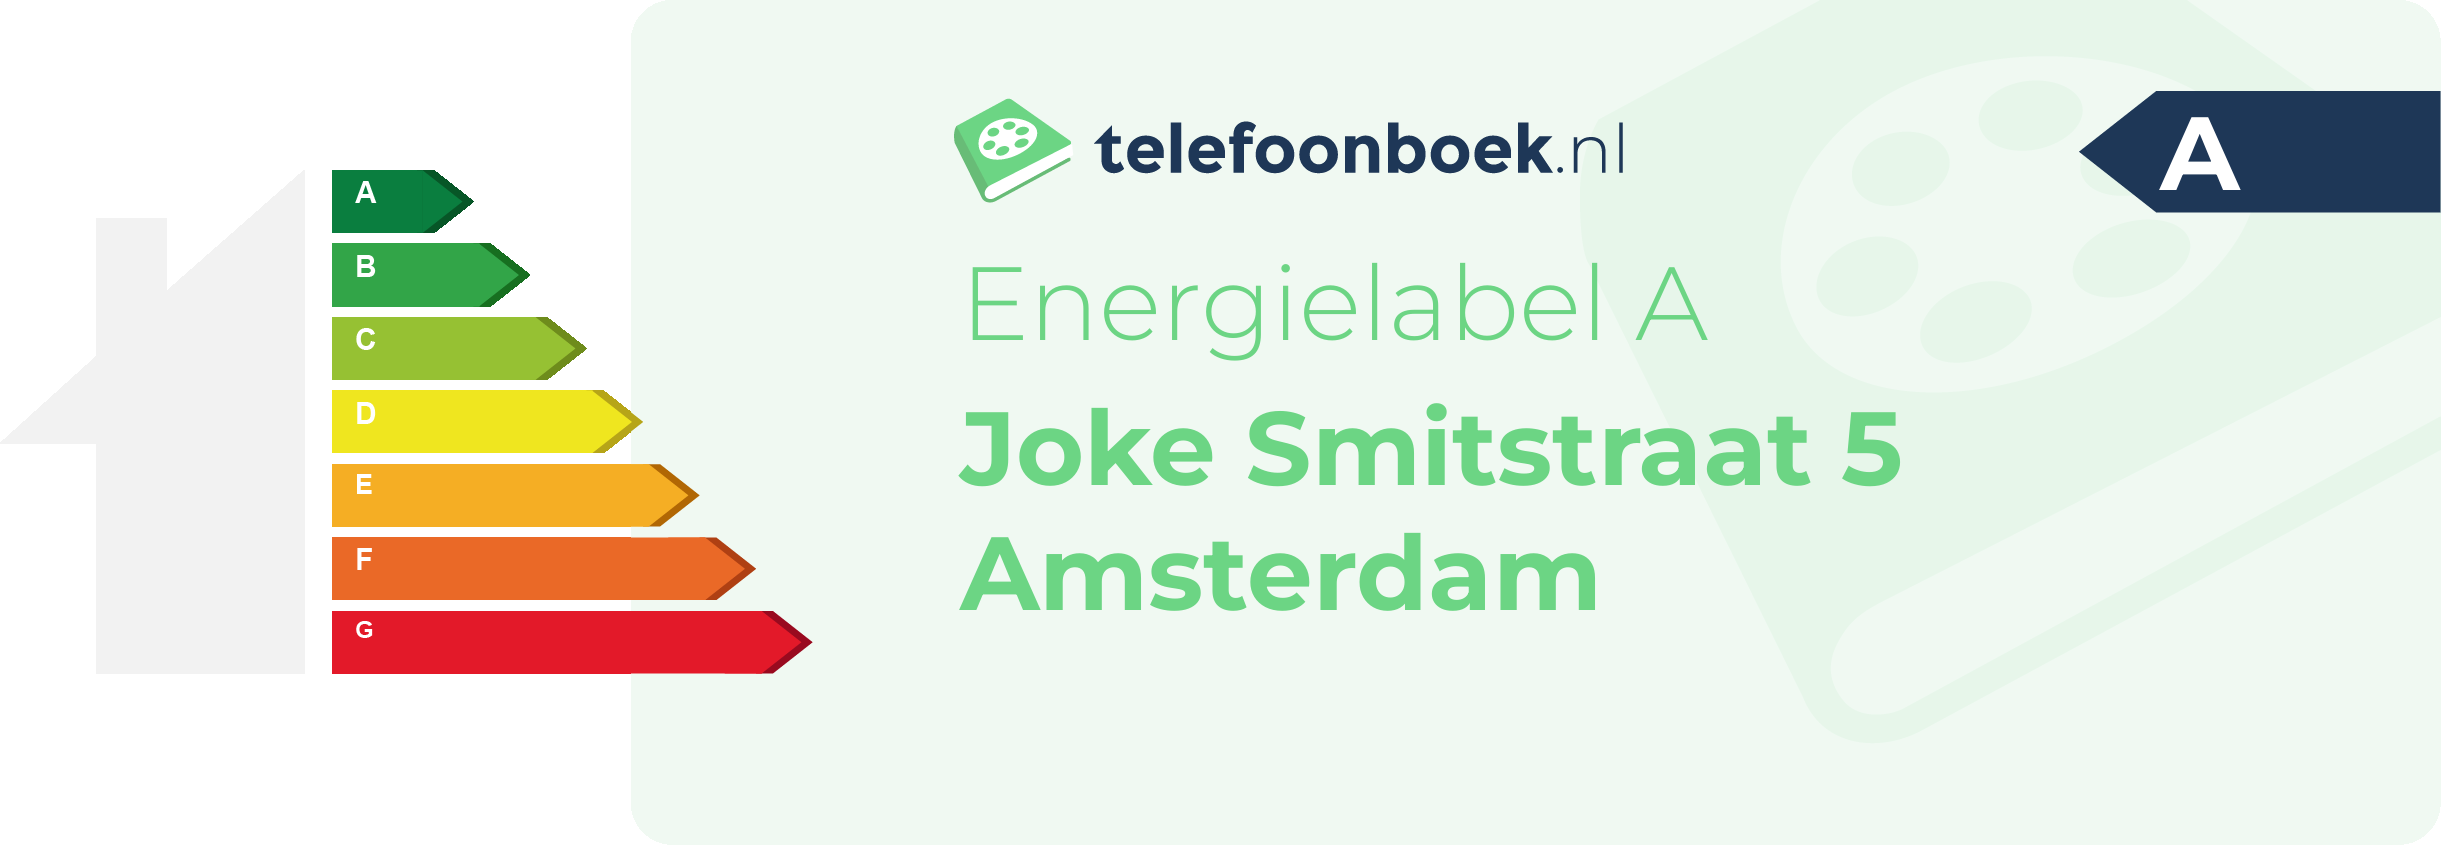 Energielabel Joke Smitstraat 5 Amsterdam